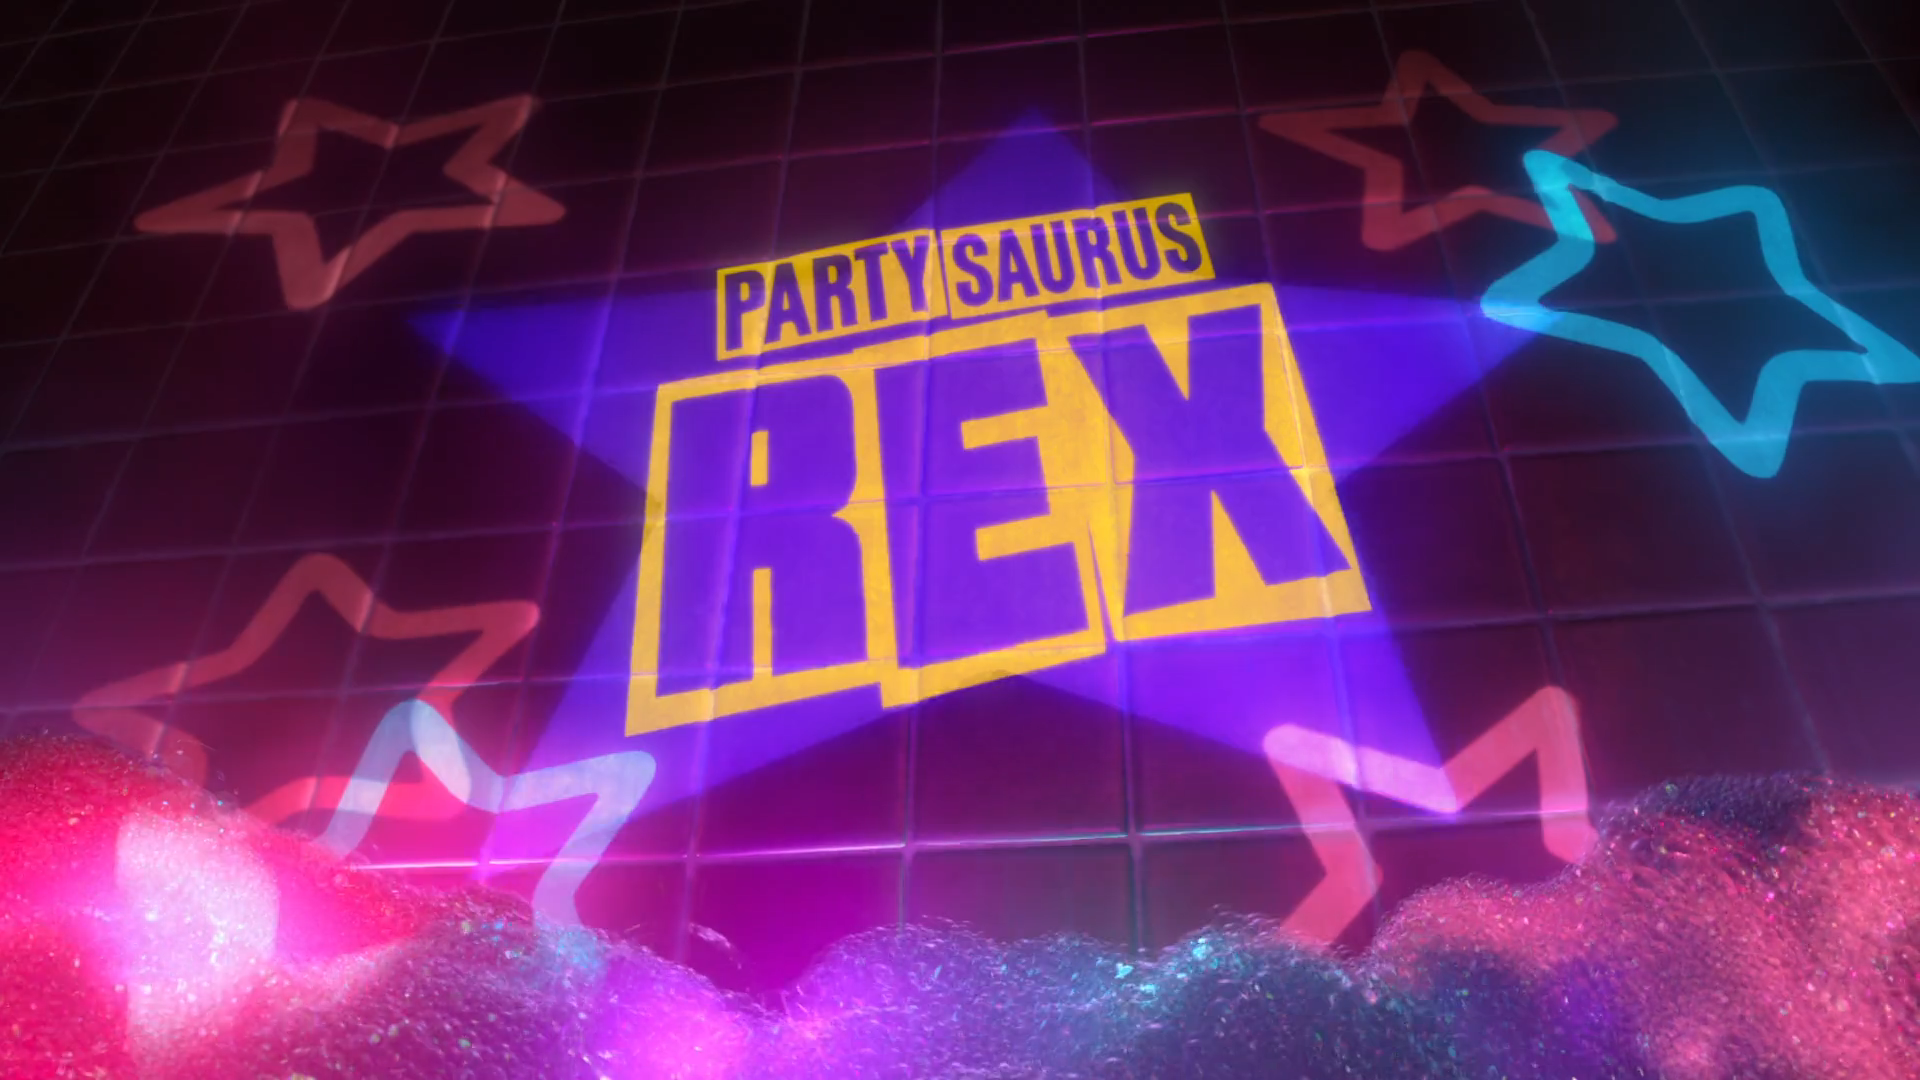 Amazing Partysaurus Rex Pictures & Backgrounds